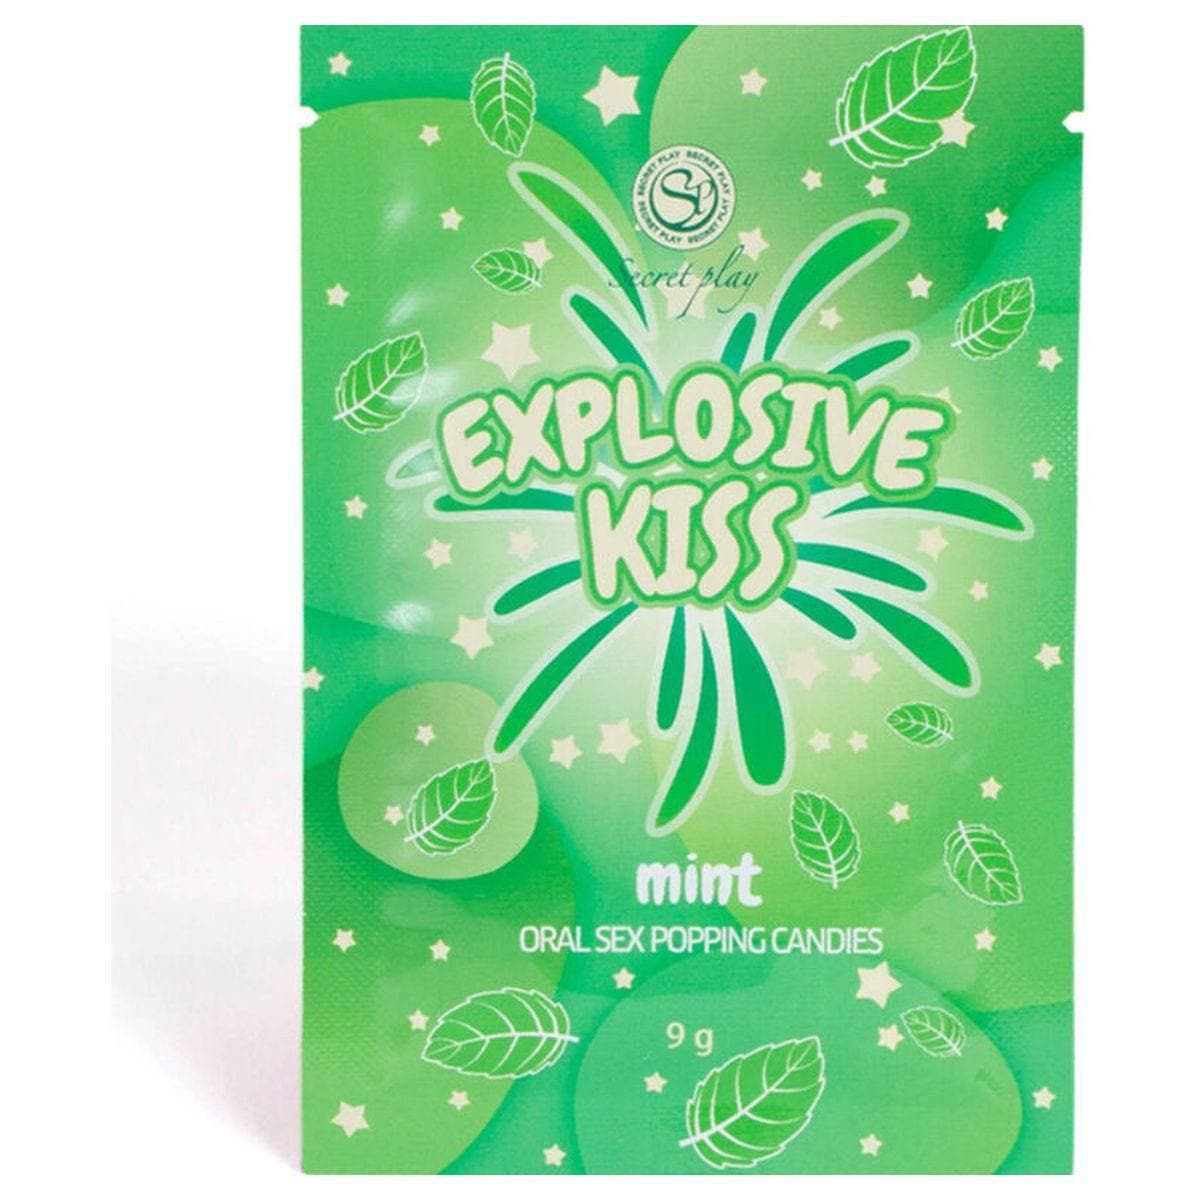 Explosive Kiss, Caramelos Explosivos de Menta com Explosão de Sabor - Pérola SexShop